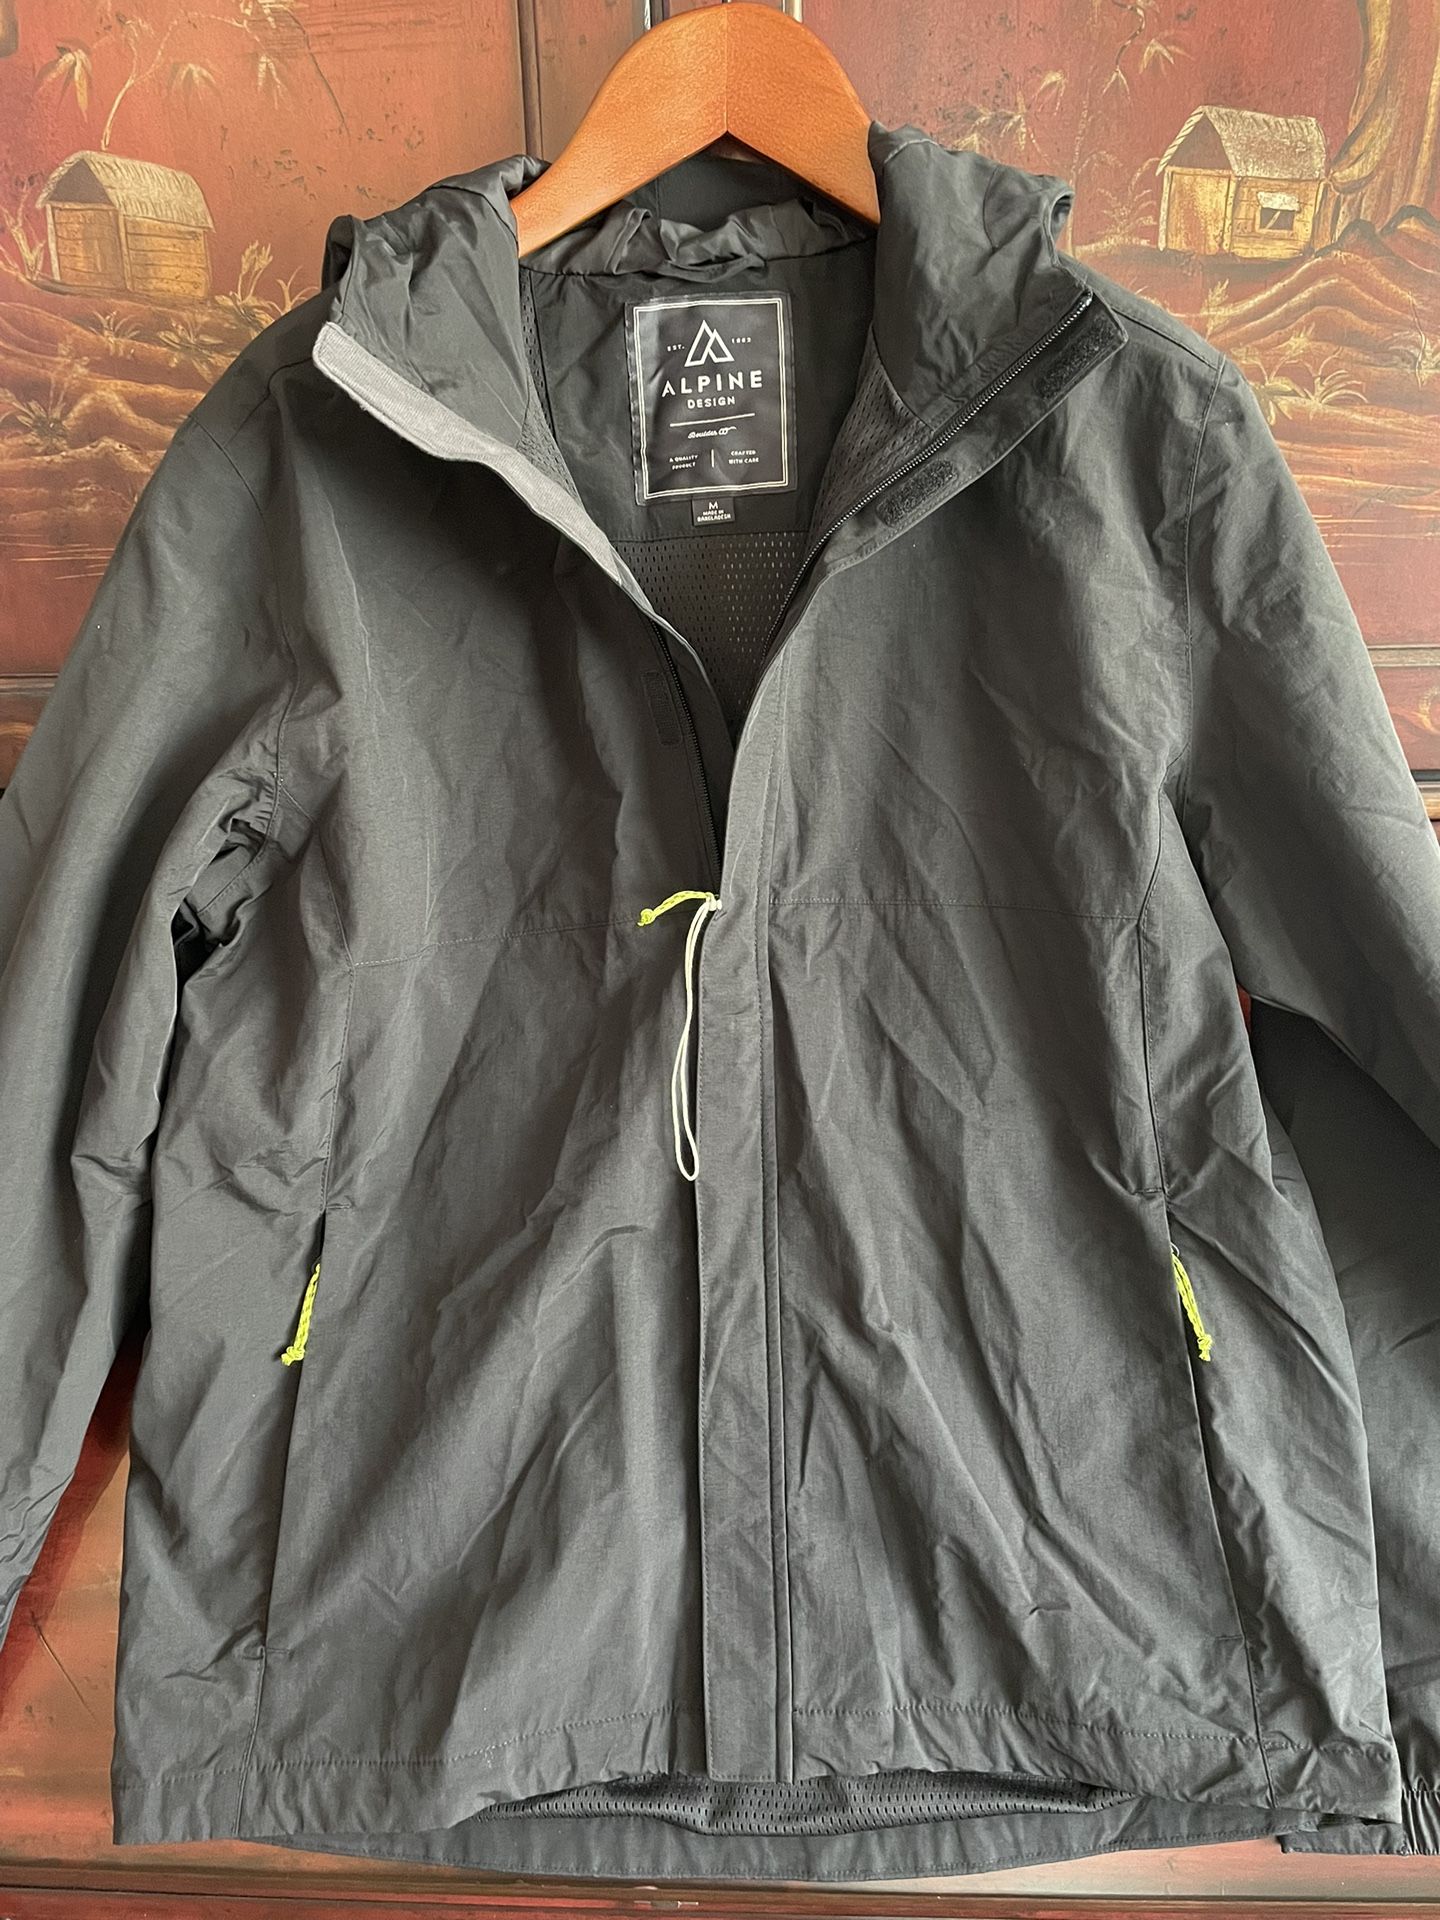 Alpine Design Mens Rain/Wind Jacket Size M Also Have A Large 